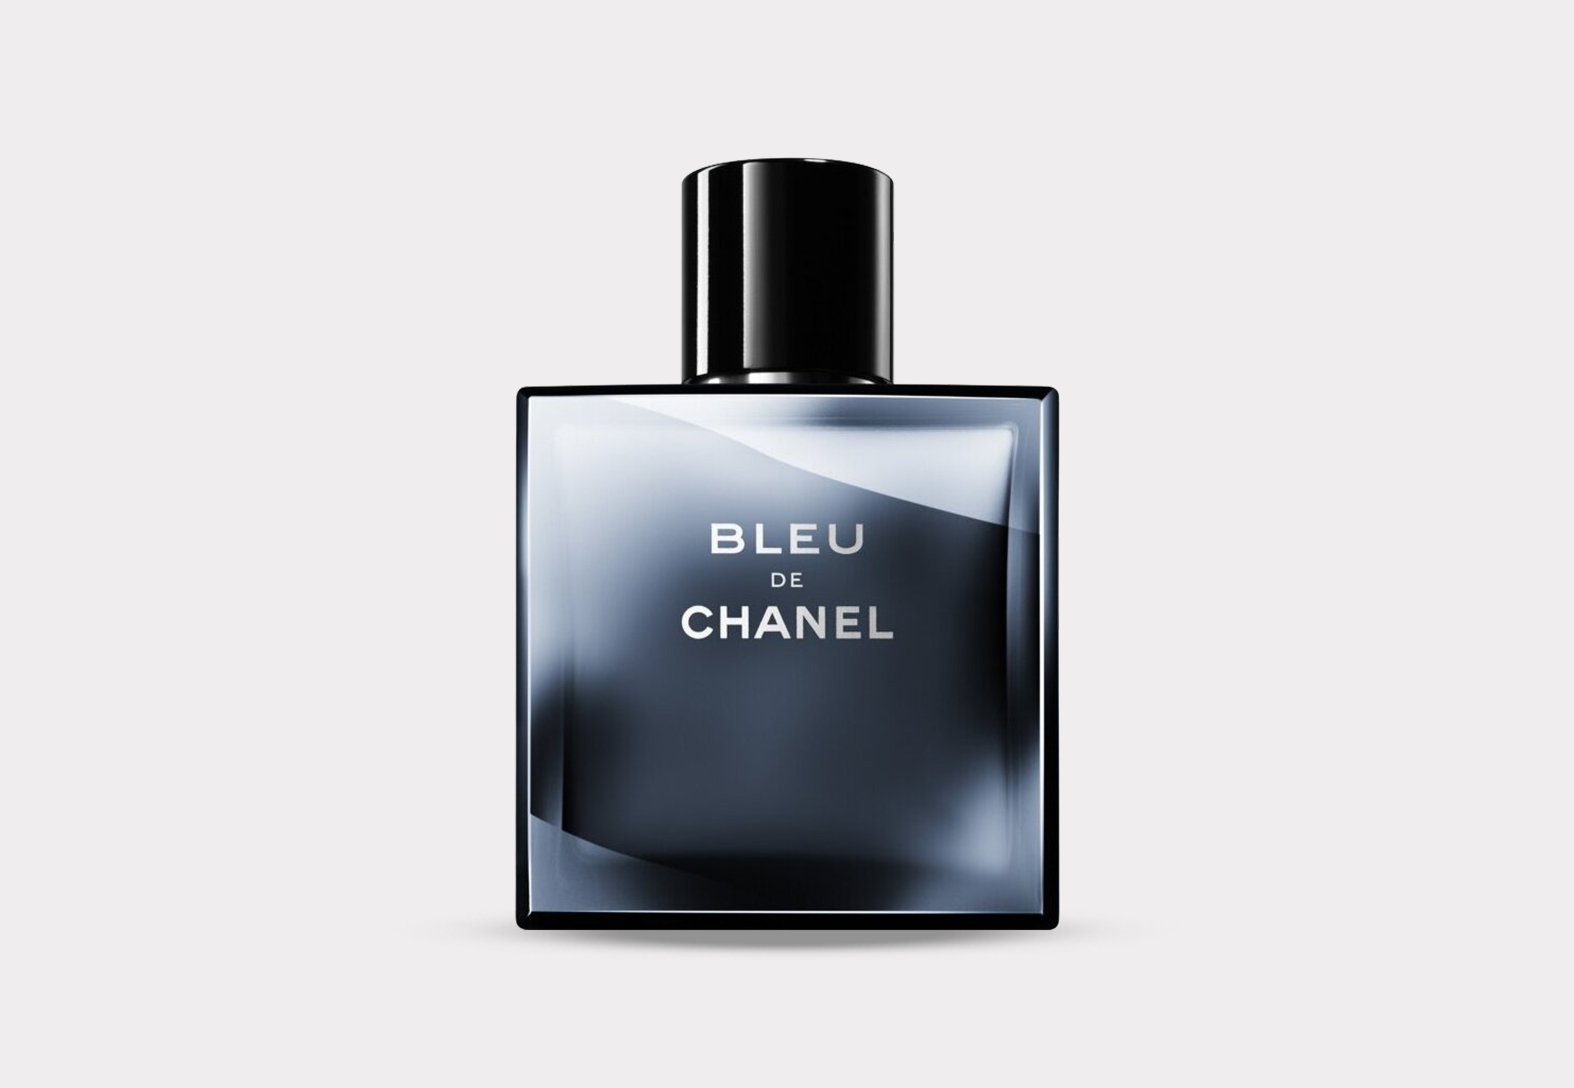 Bleu de chanel eau de. Chanel bleu de Chanel EDT 100ml. Chanel bleu de Chanel Parfum 100 ml. Chanel bleu EDP 100ml. Chanel Blue EDP 100 ml.